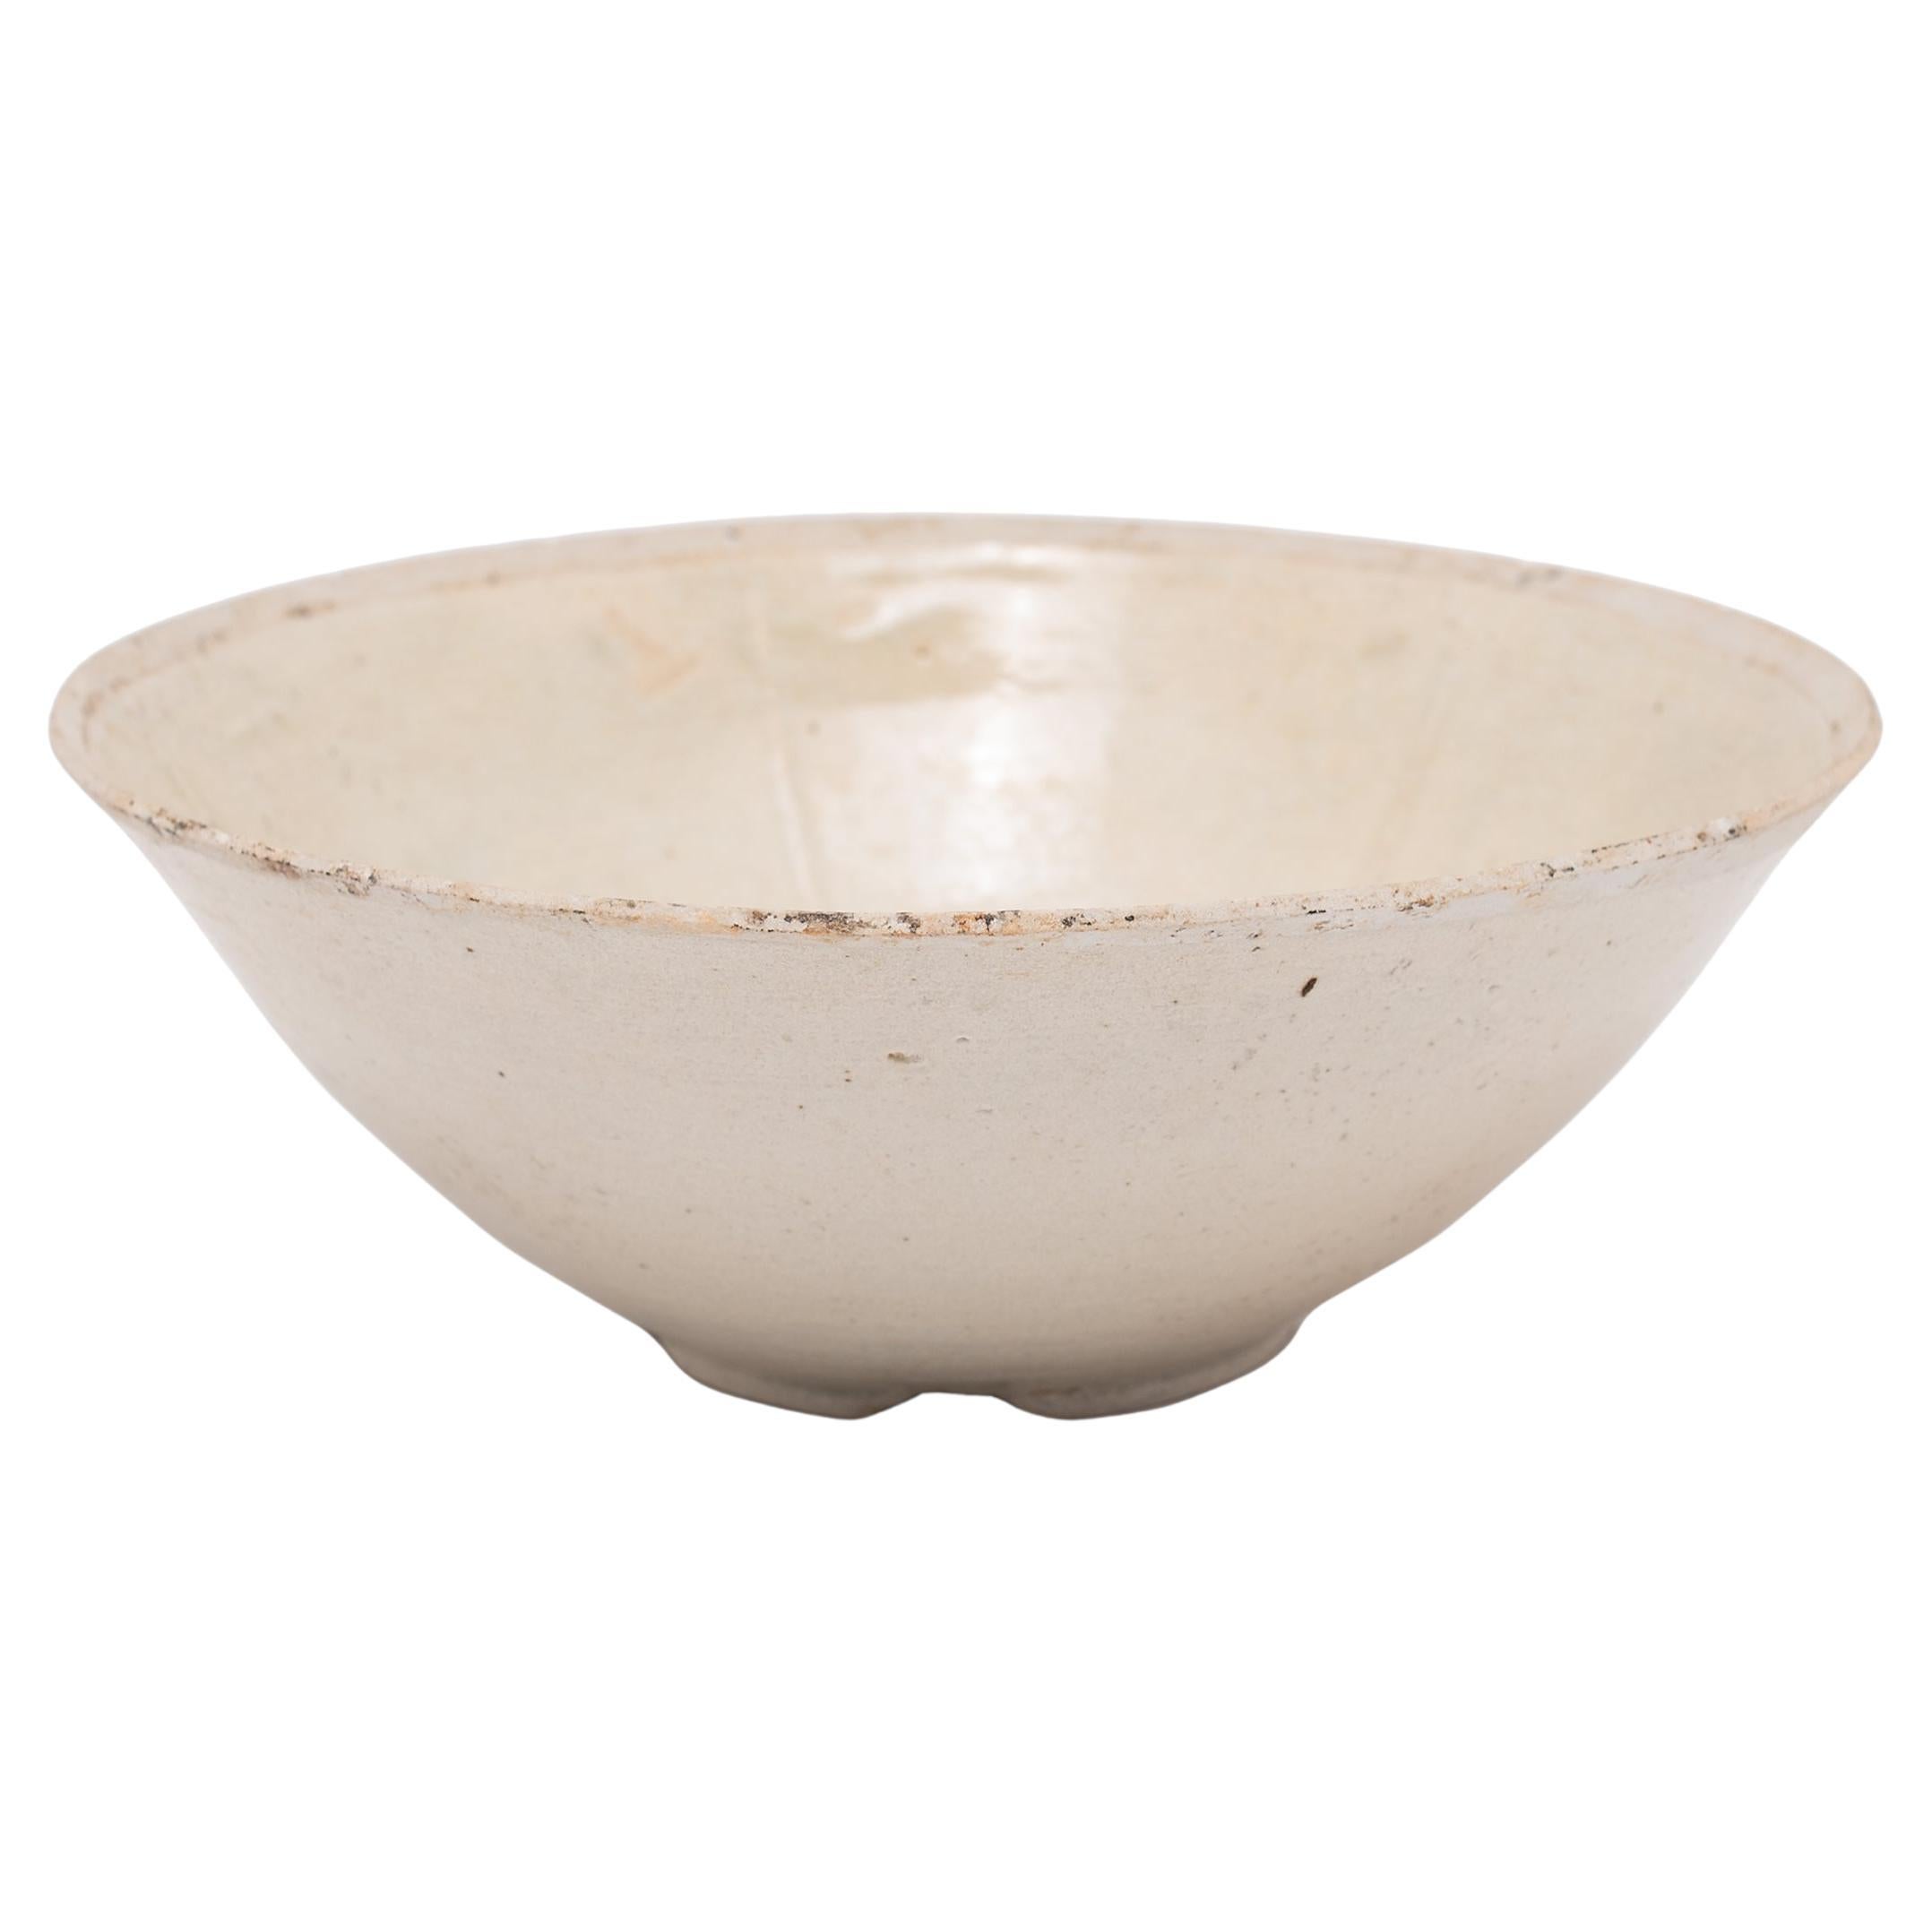 Pale Glazed Chinese Koi Bowl, C. 1850